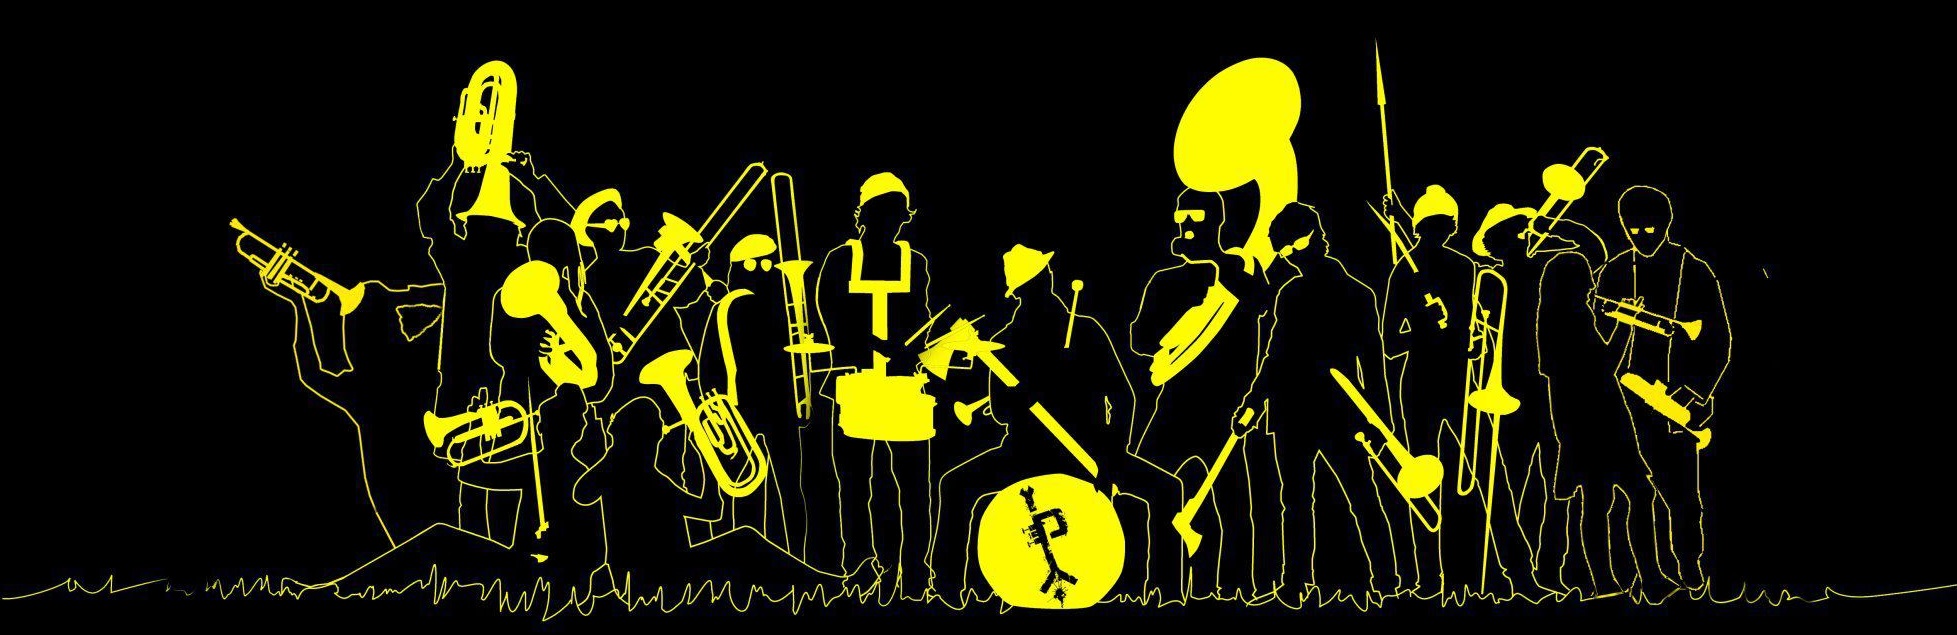 Fanfare-Pikolo-Brass-Band-Silhoutette.jpg